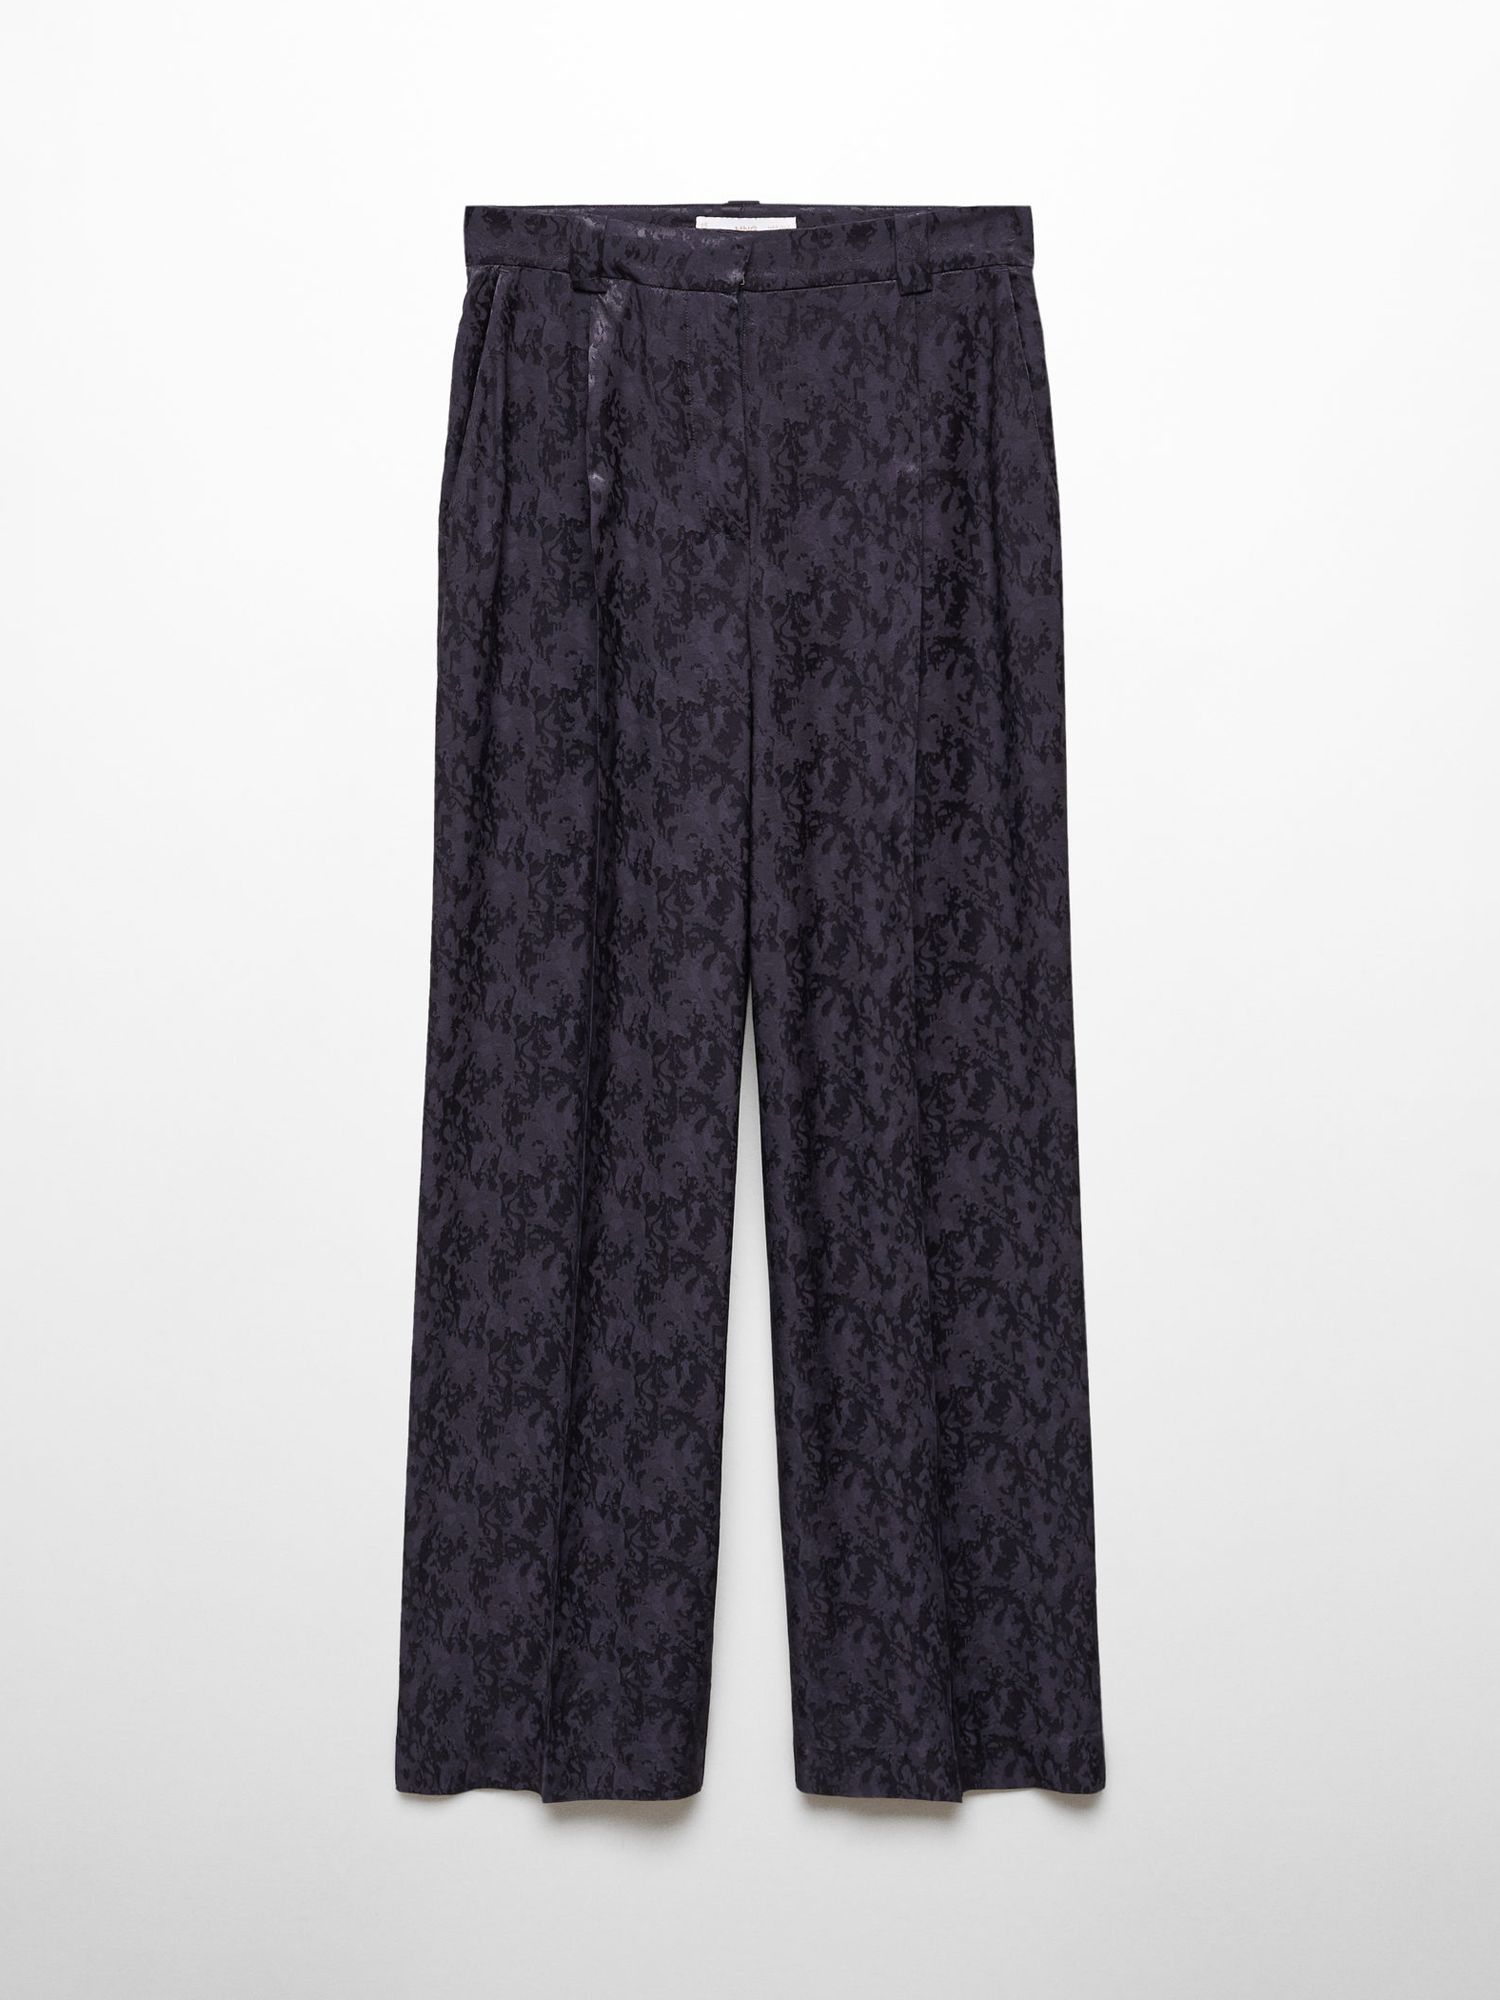 Mango Astrid Jacquard Suit Trousers, Dark Blue, L